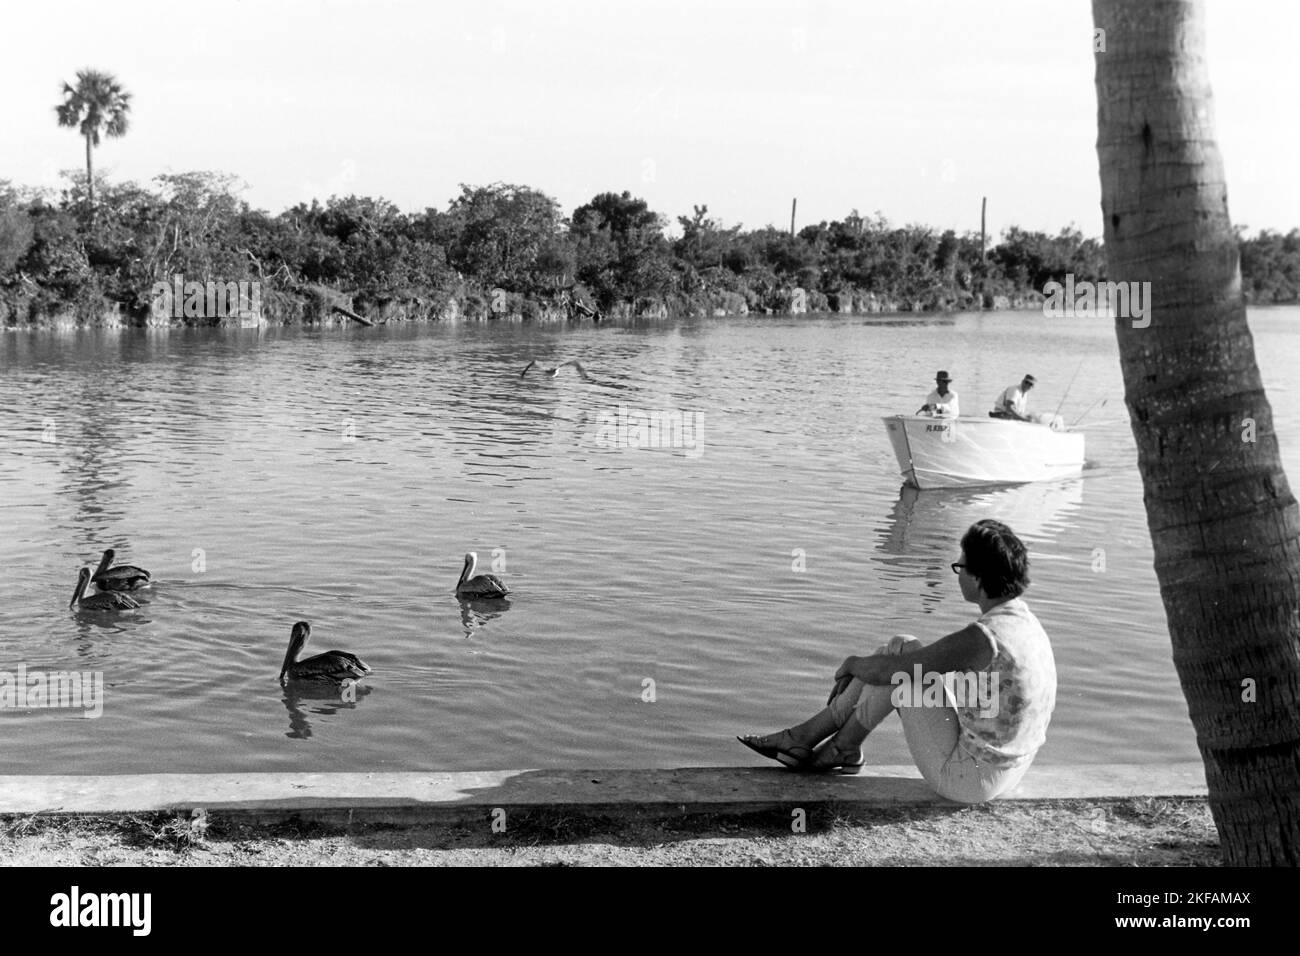 Frau betrachtet Pelikane auf dem Wasser im Oleta River State Park, Miami, Florida, USA 1965. Woman looking at pelicans on the water in Oleta River State Park, Miami, Florida, USA 1965. Stock Photo